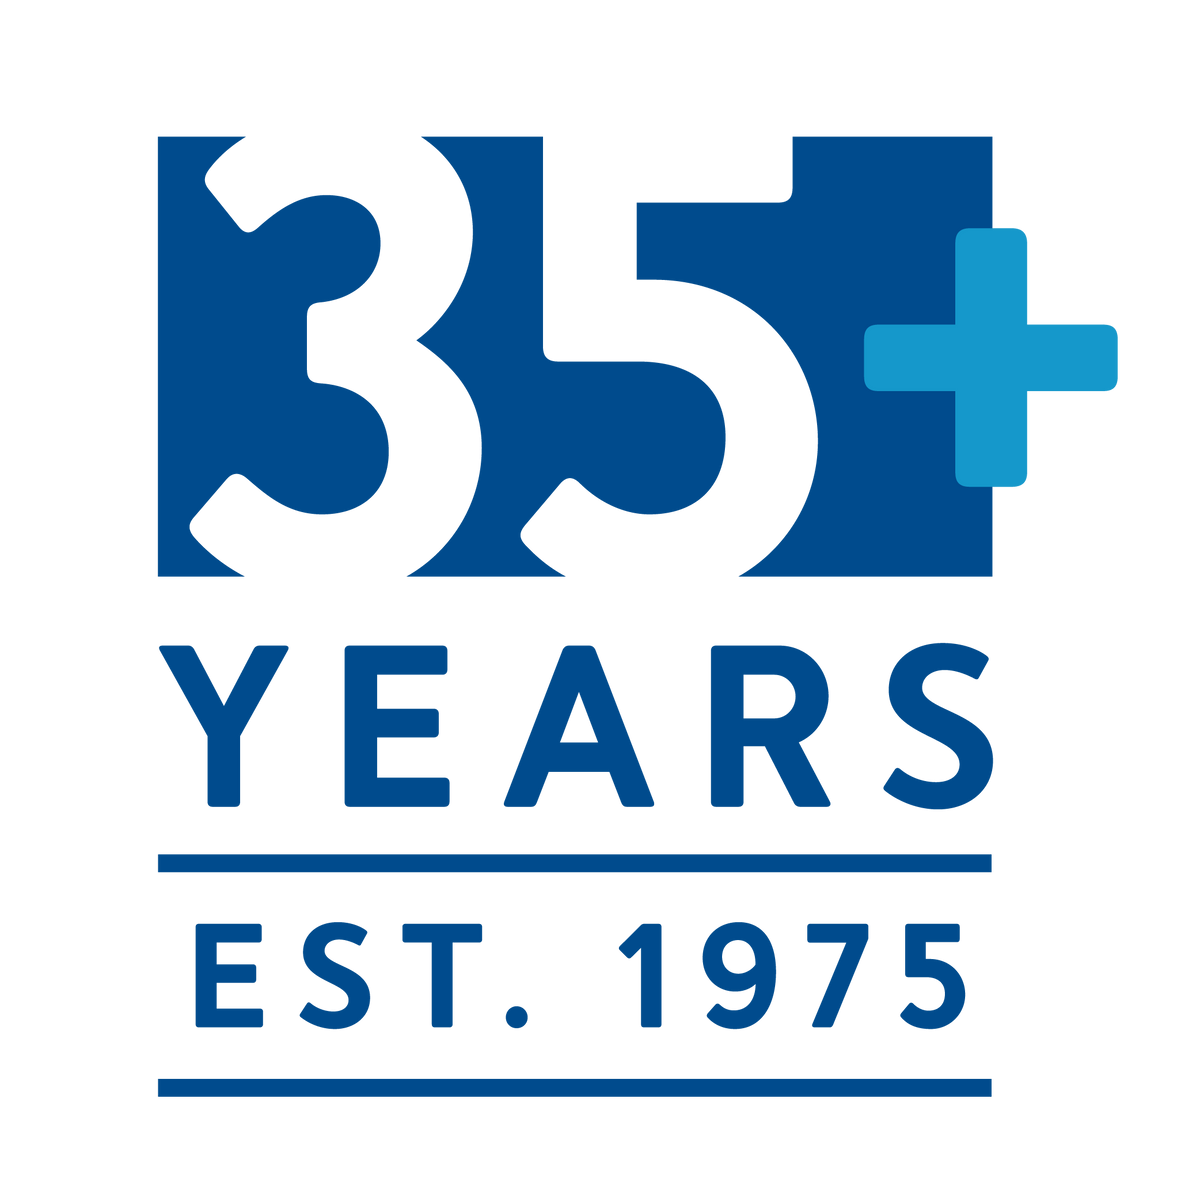 35 Plus Years - Established in 1975